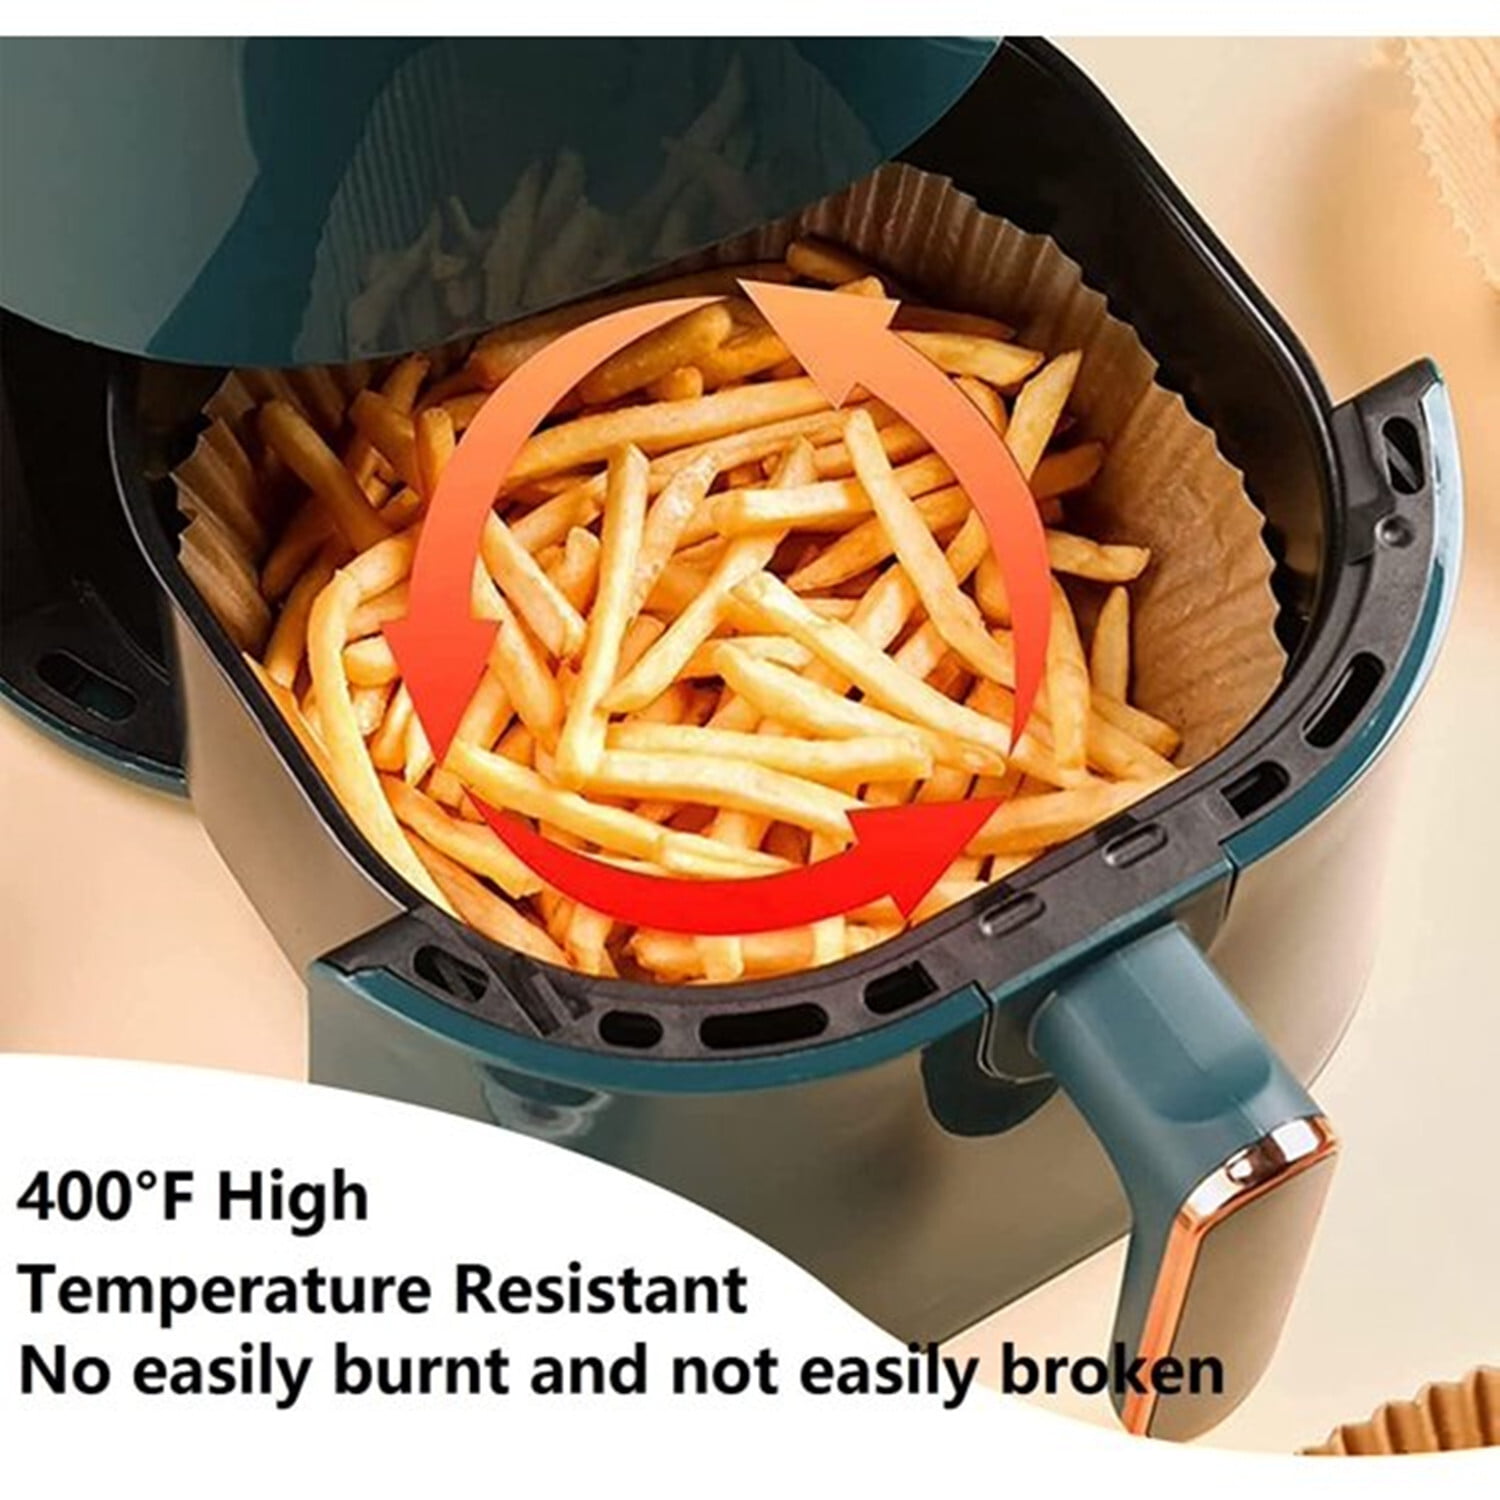 Generic Air Fryer Disposable Paper Liner, 100pcs Non-Stick Disposable Air Fryer Liners, Baking Paper for 3-5QT Air Frye, Oil-Proof, Wat